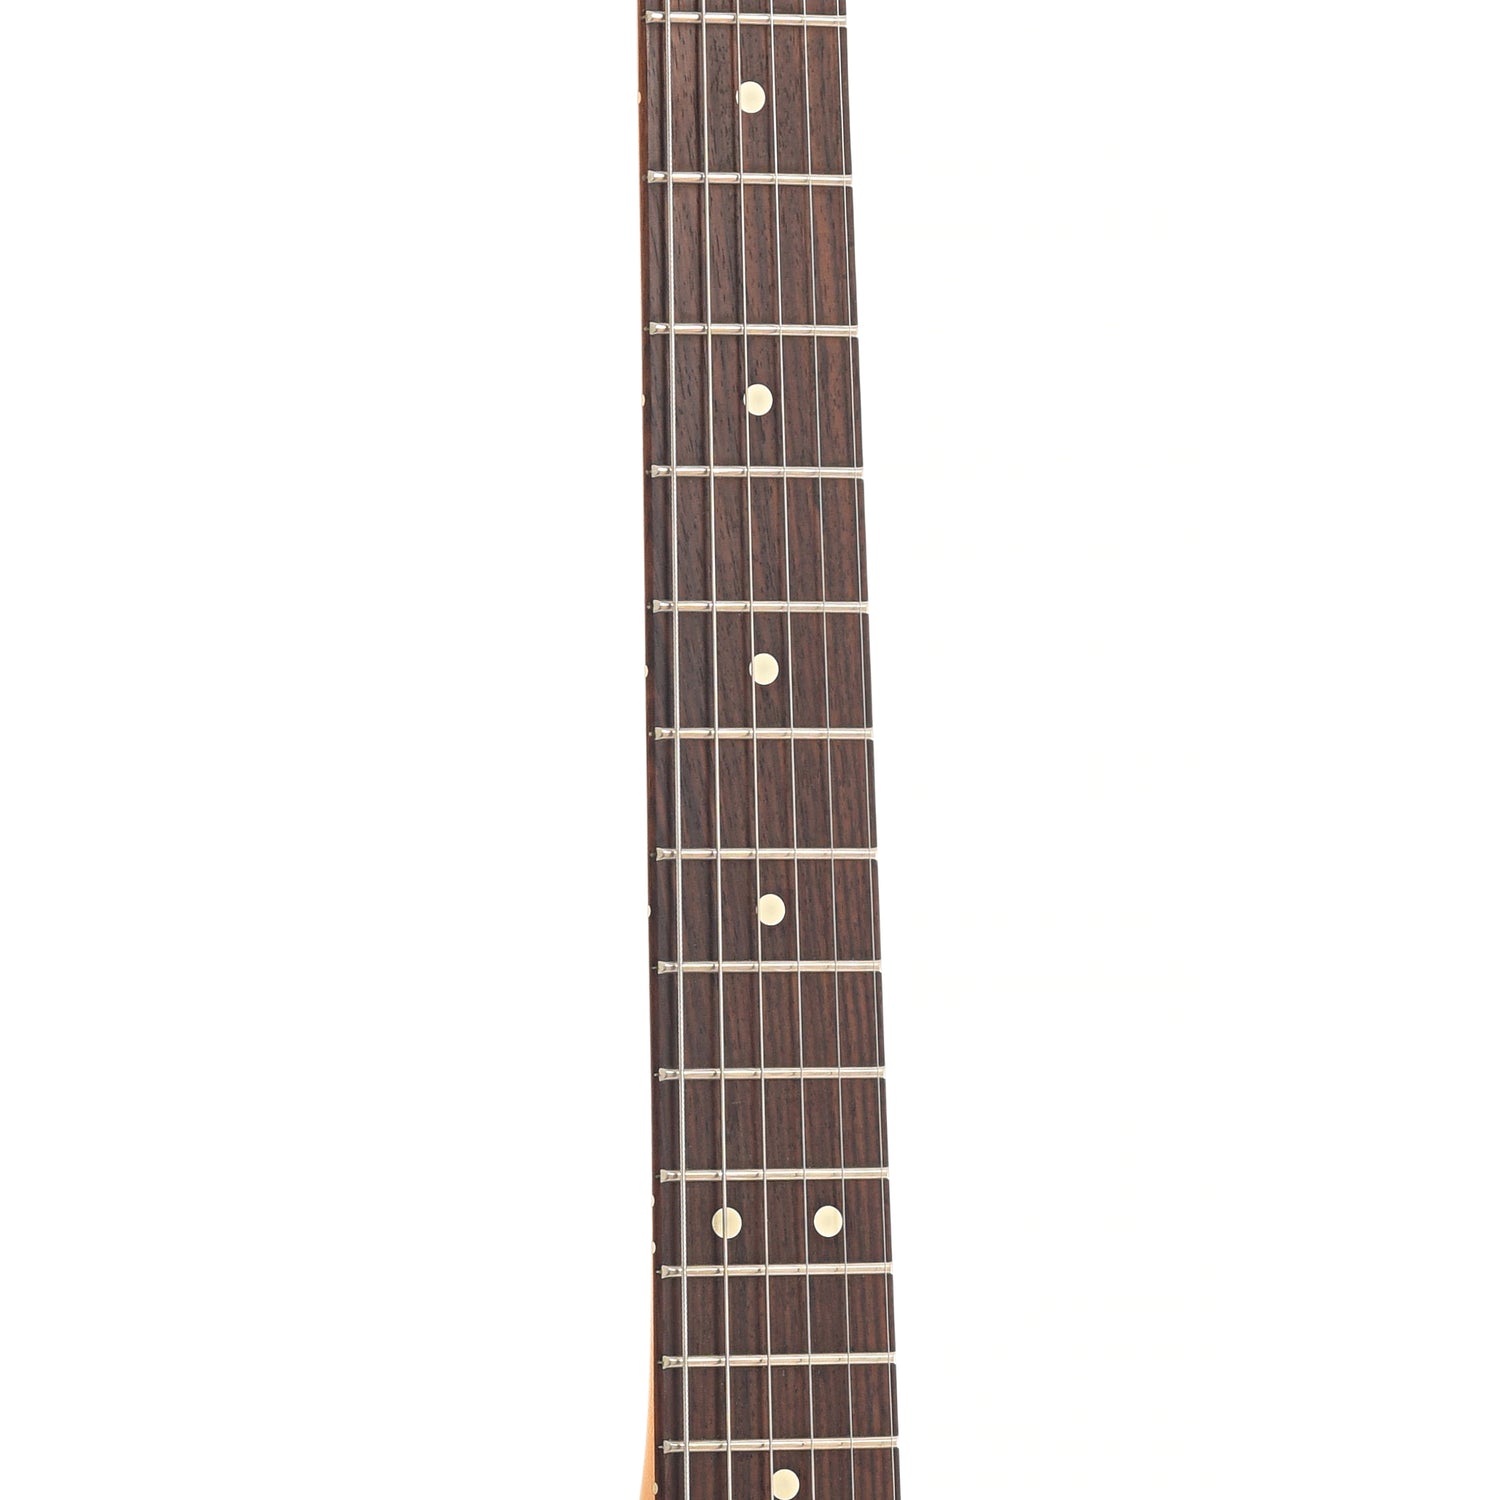 Fretboard of Fender American Standard Telecaster Electric Guitar (1996)